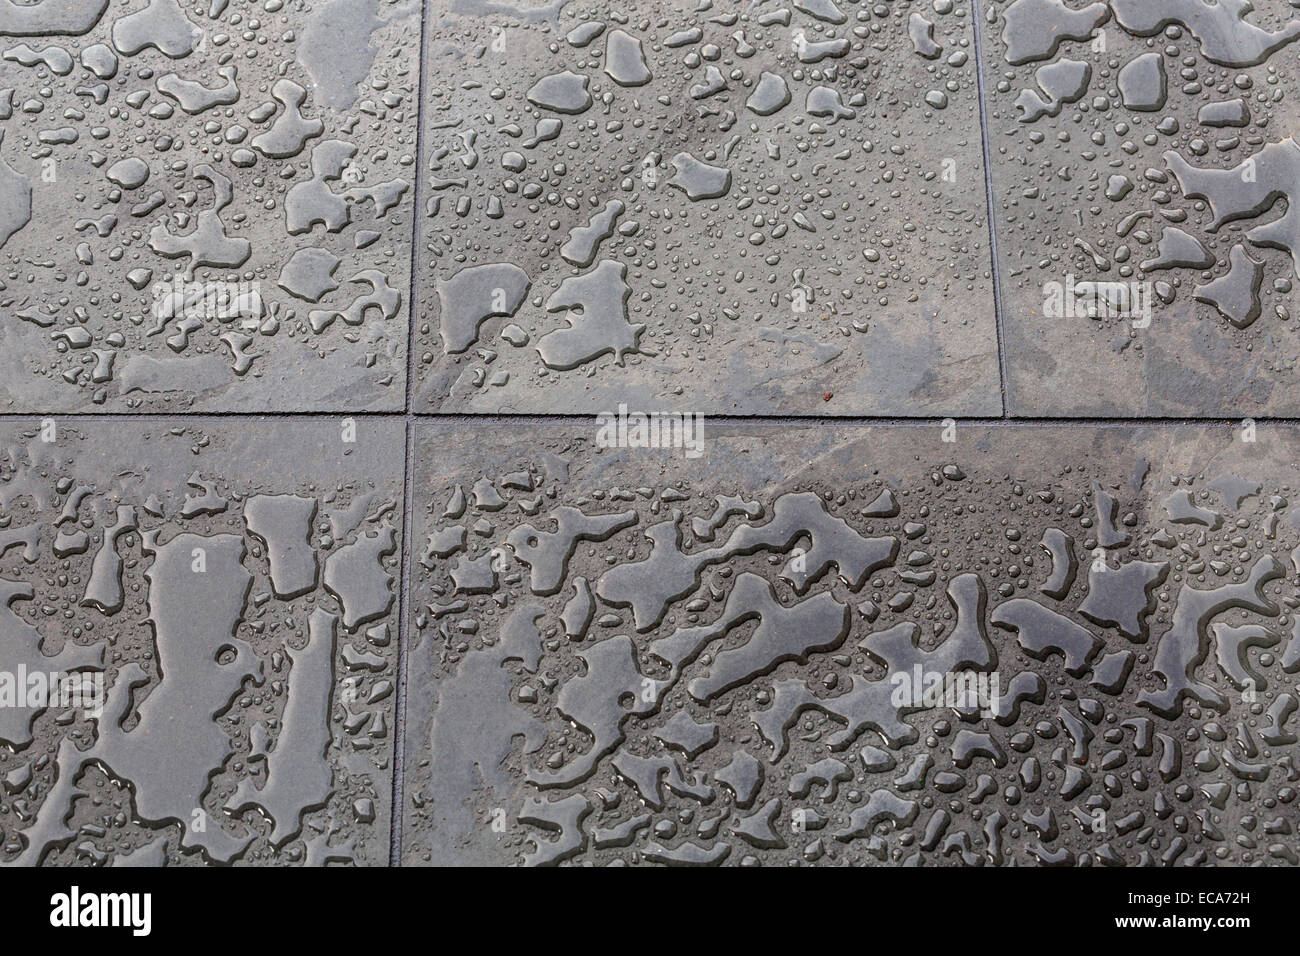 Slate tile floor with raindrops Stock Photo